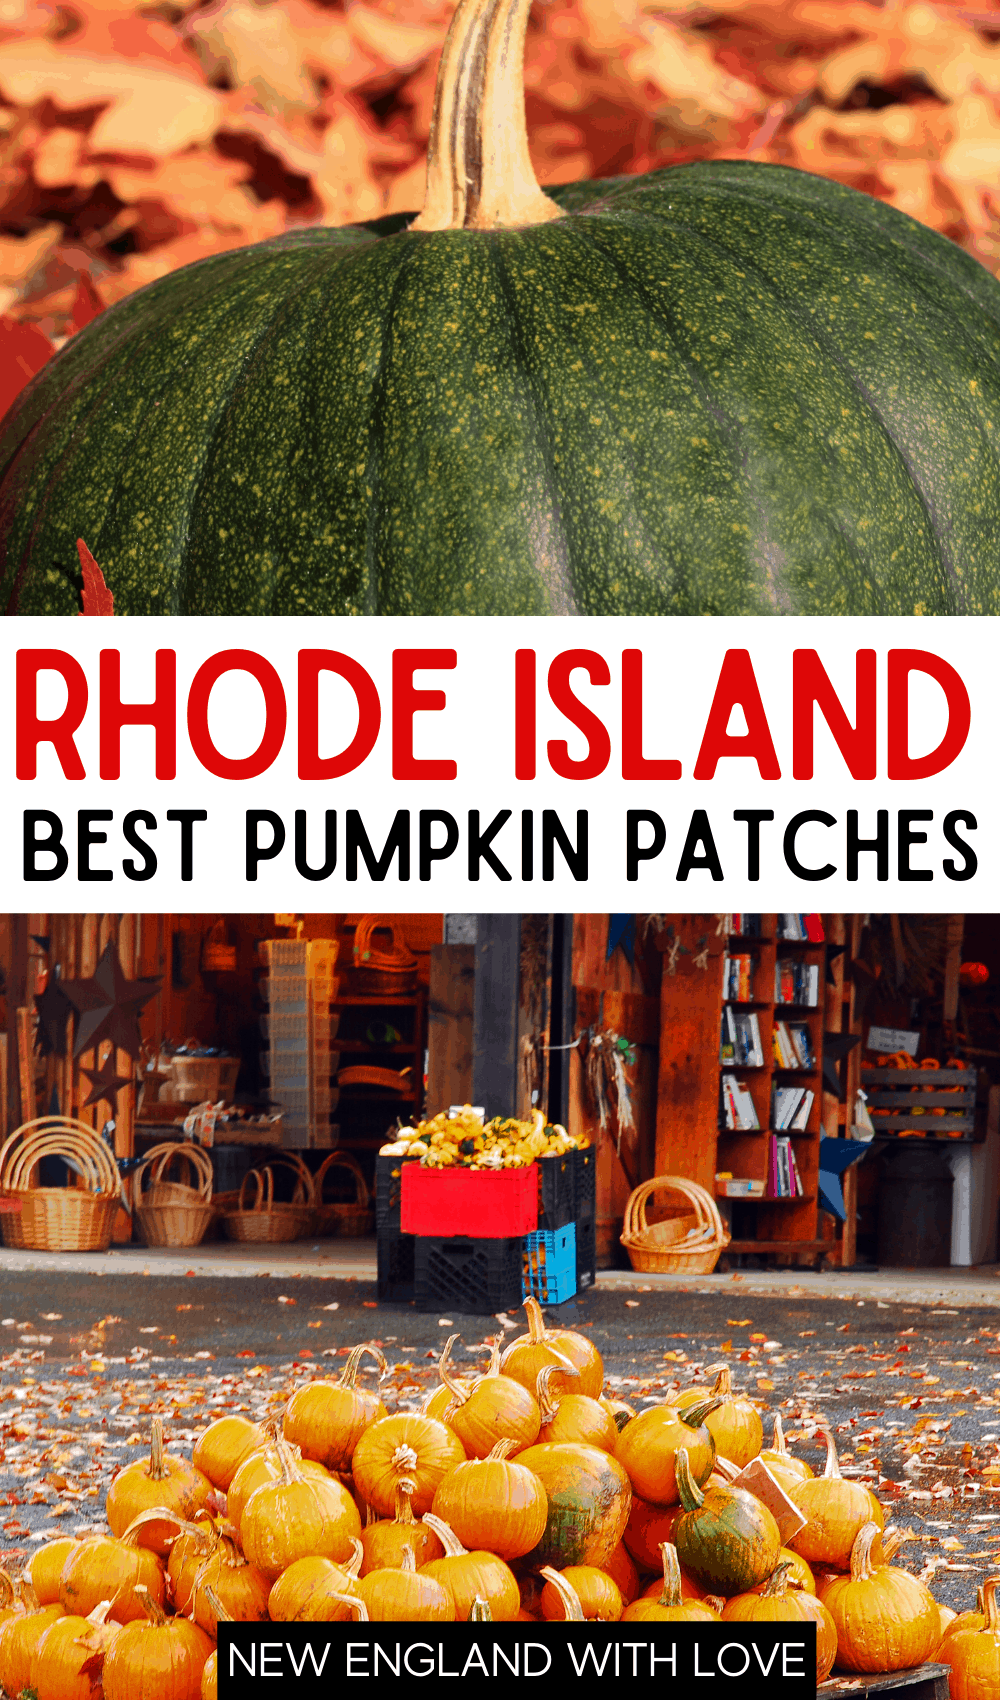 Pinterest graphic reading "RHODE ISLAND BEST PUMPKIN PATCHES"